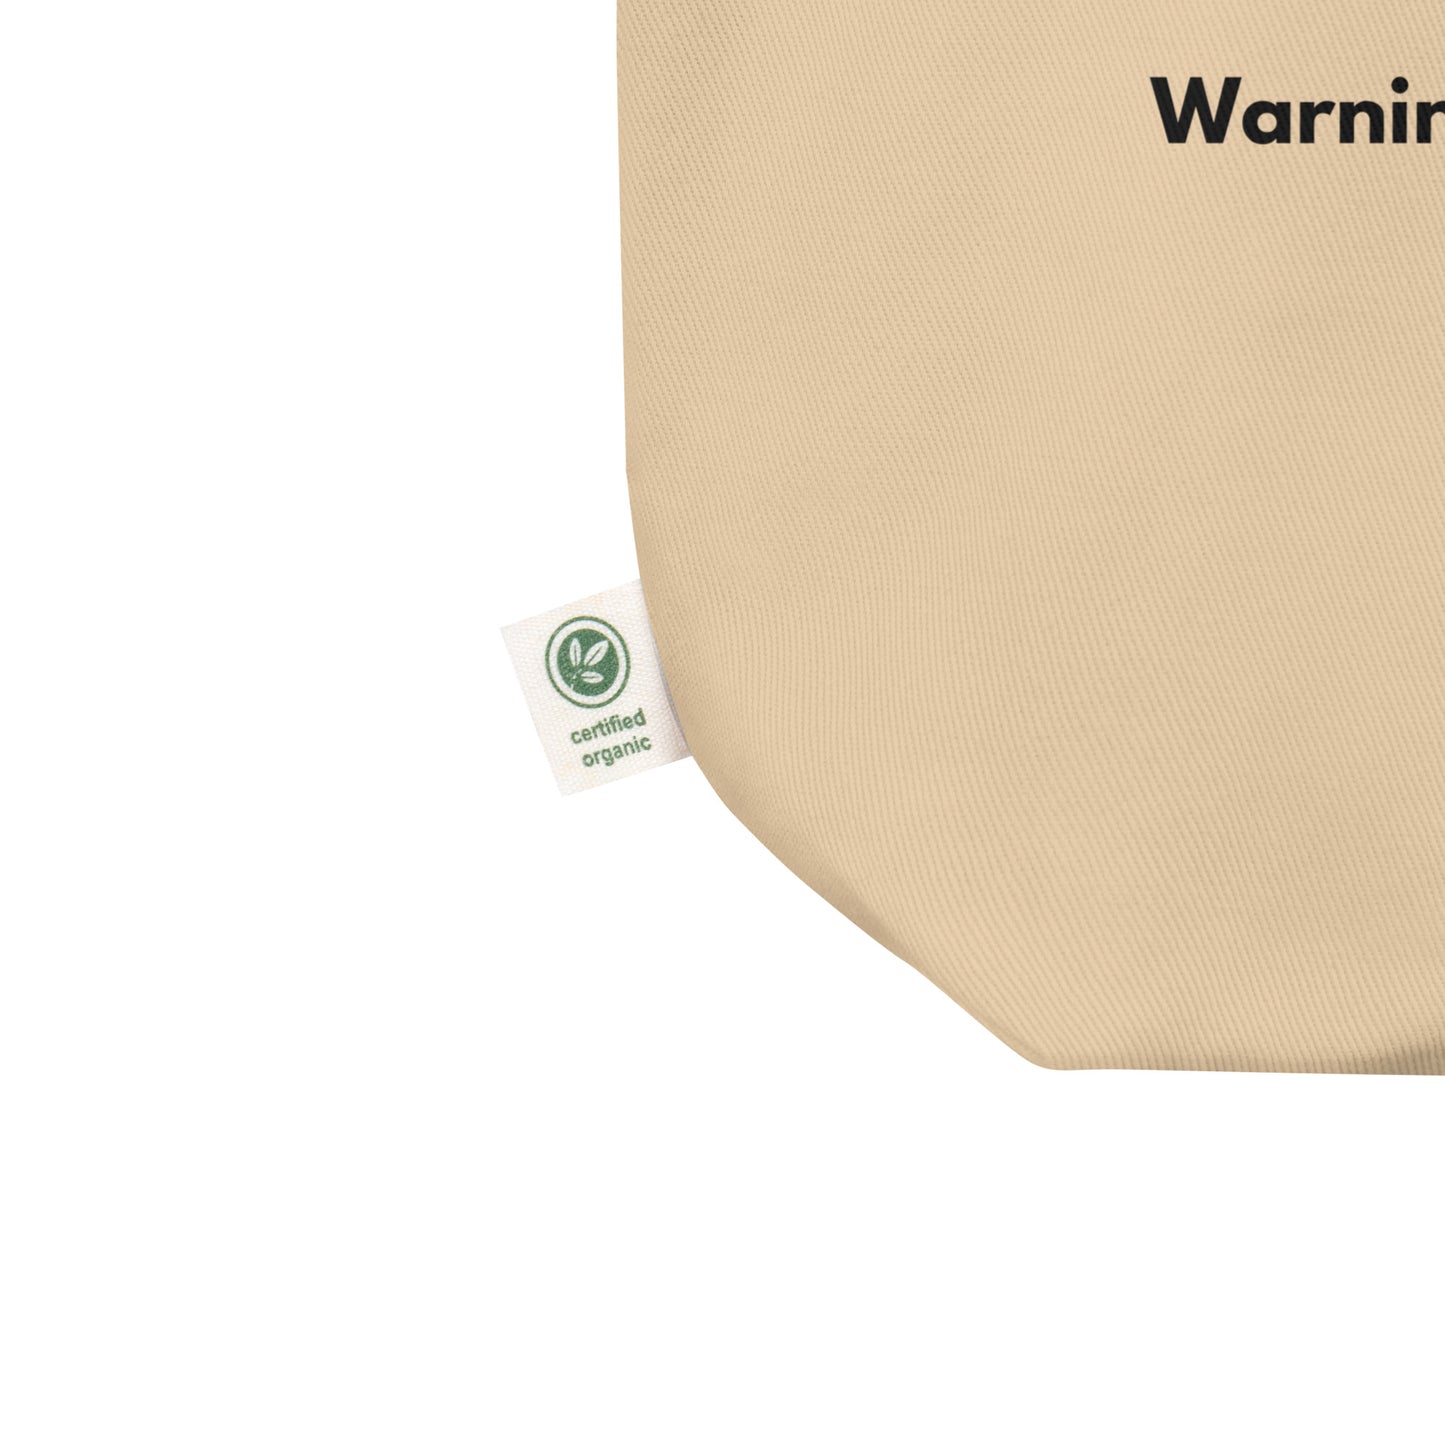 May Tell Coffee Jokes Periodically Eco Tote Bag